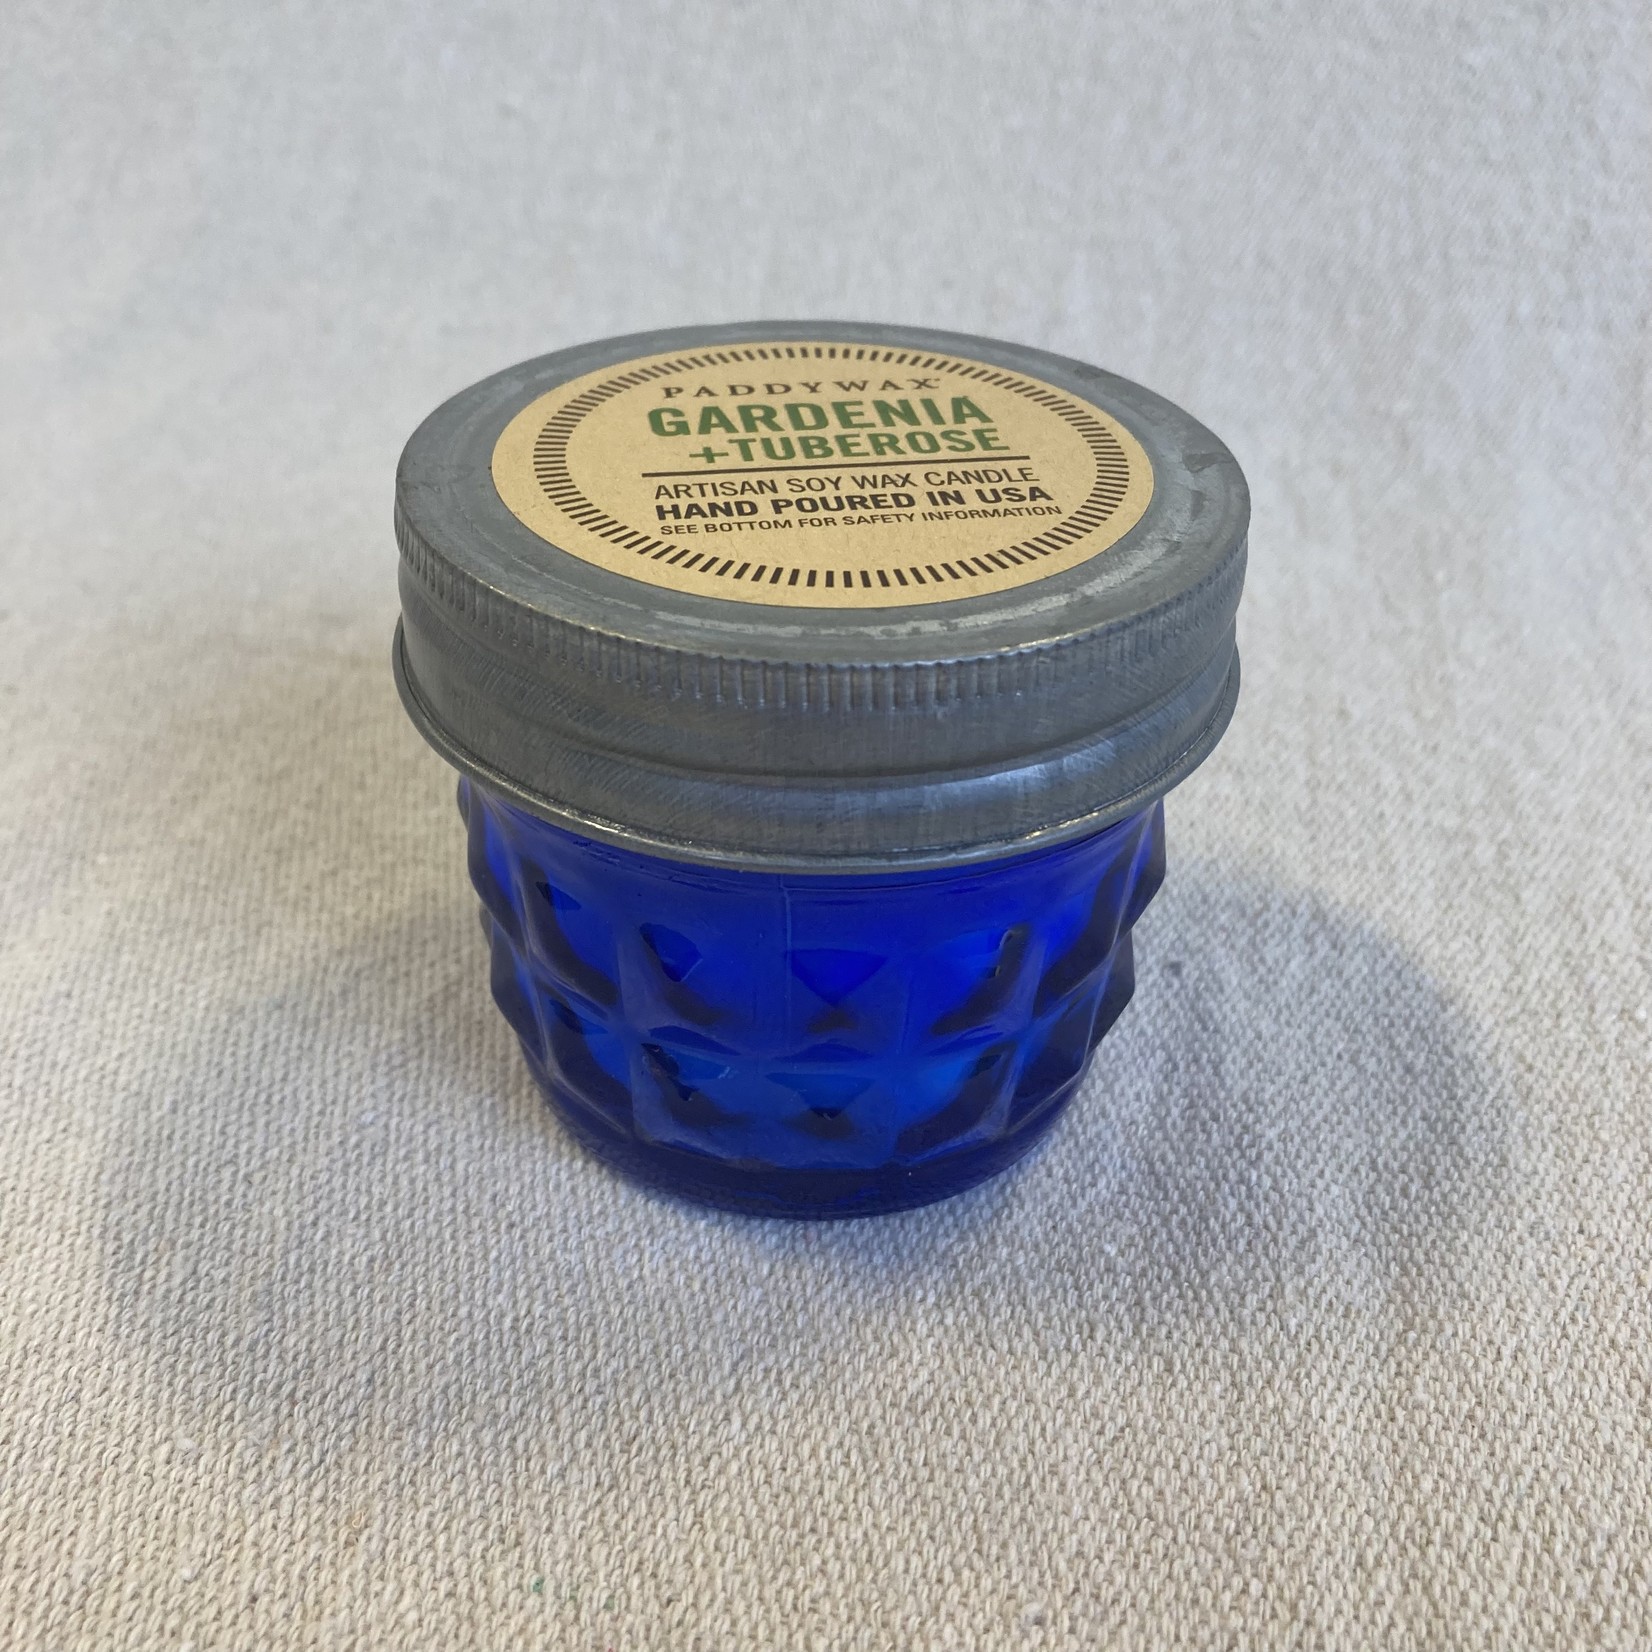 Paddywax Relish Jar Candle - Gardenia Tuberose - Small